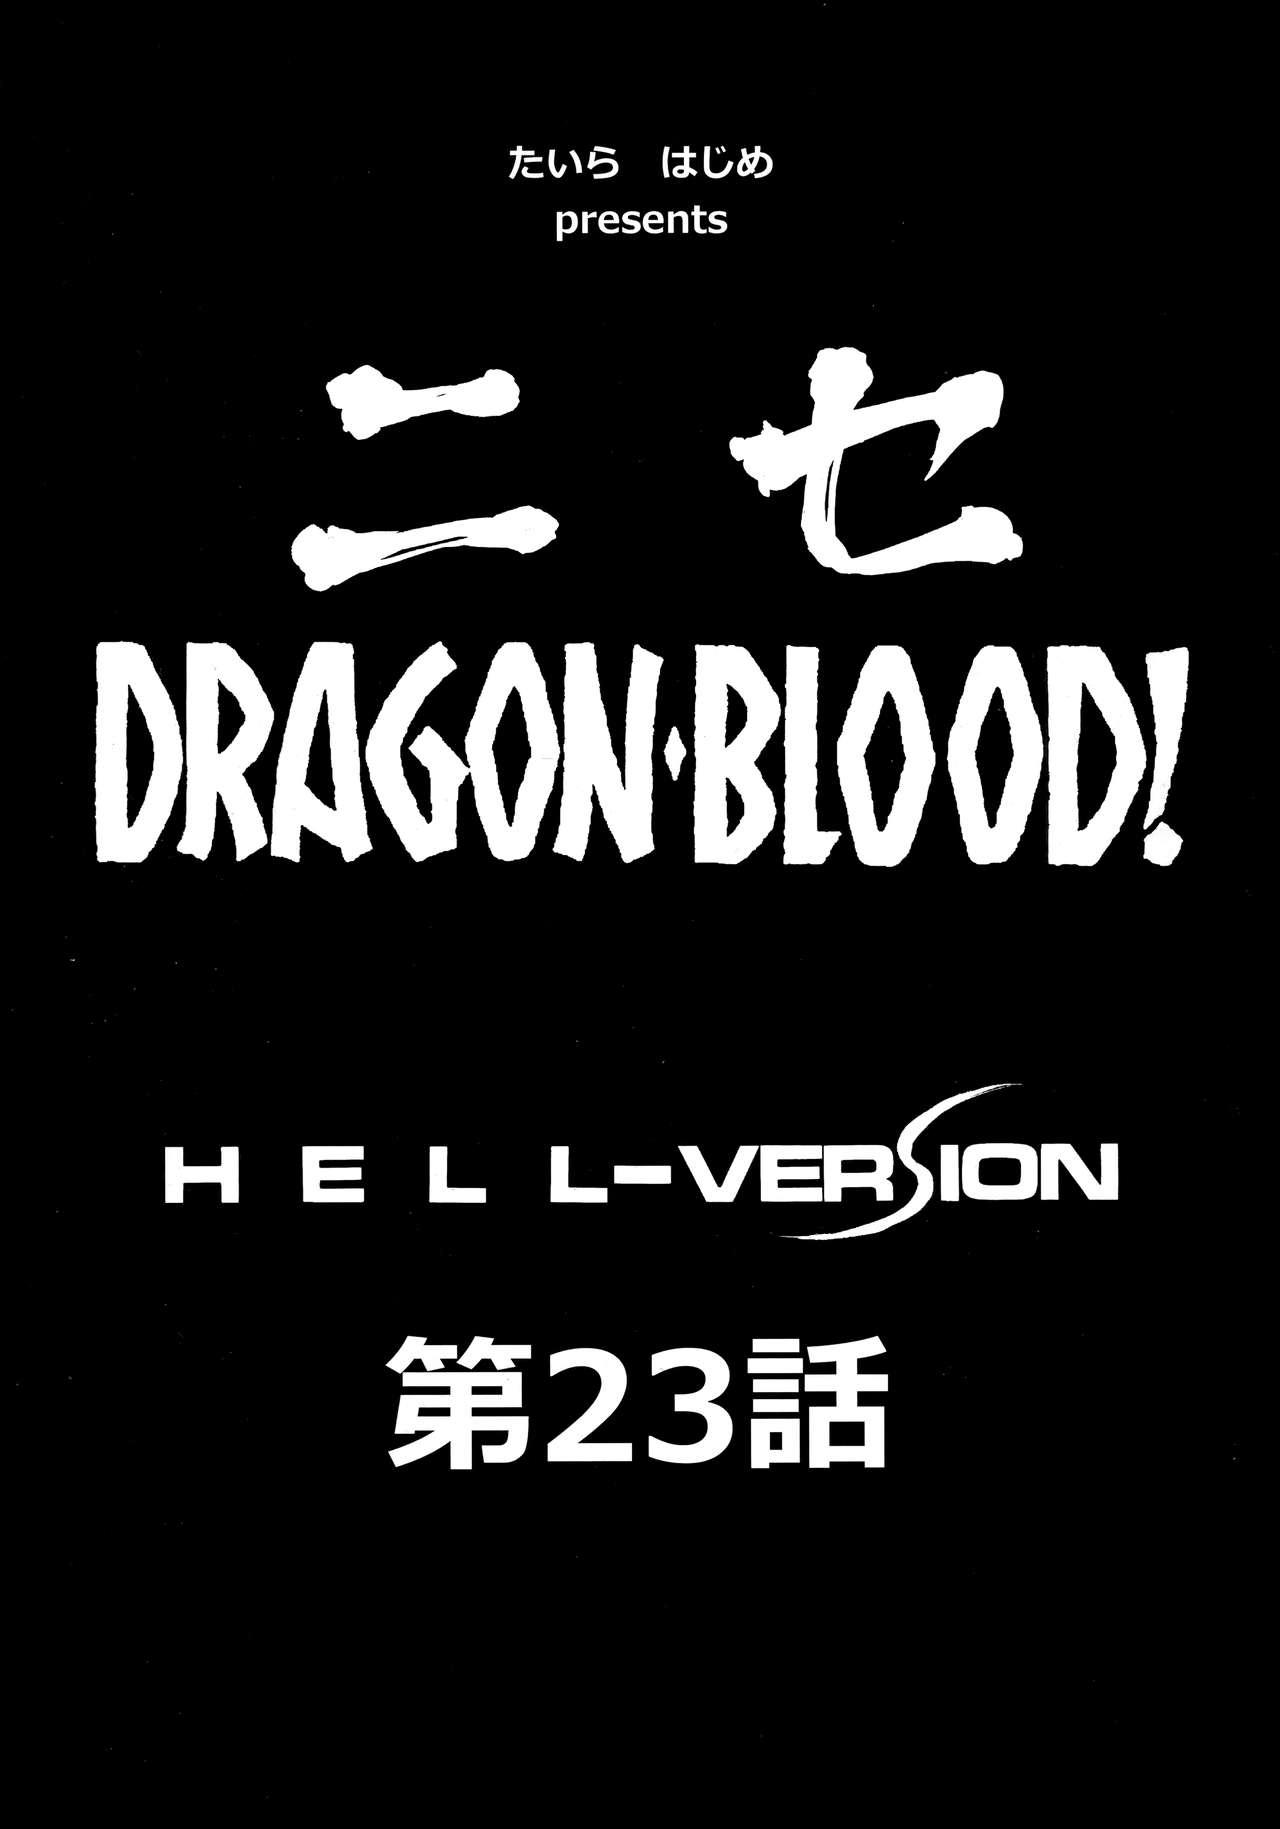 Nise Dragon Blood! 23. 9